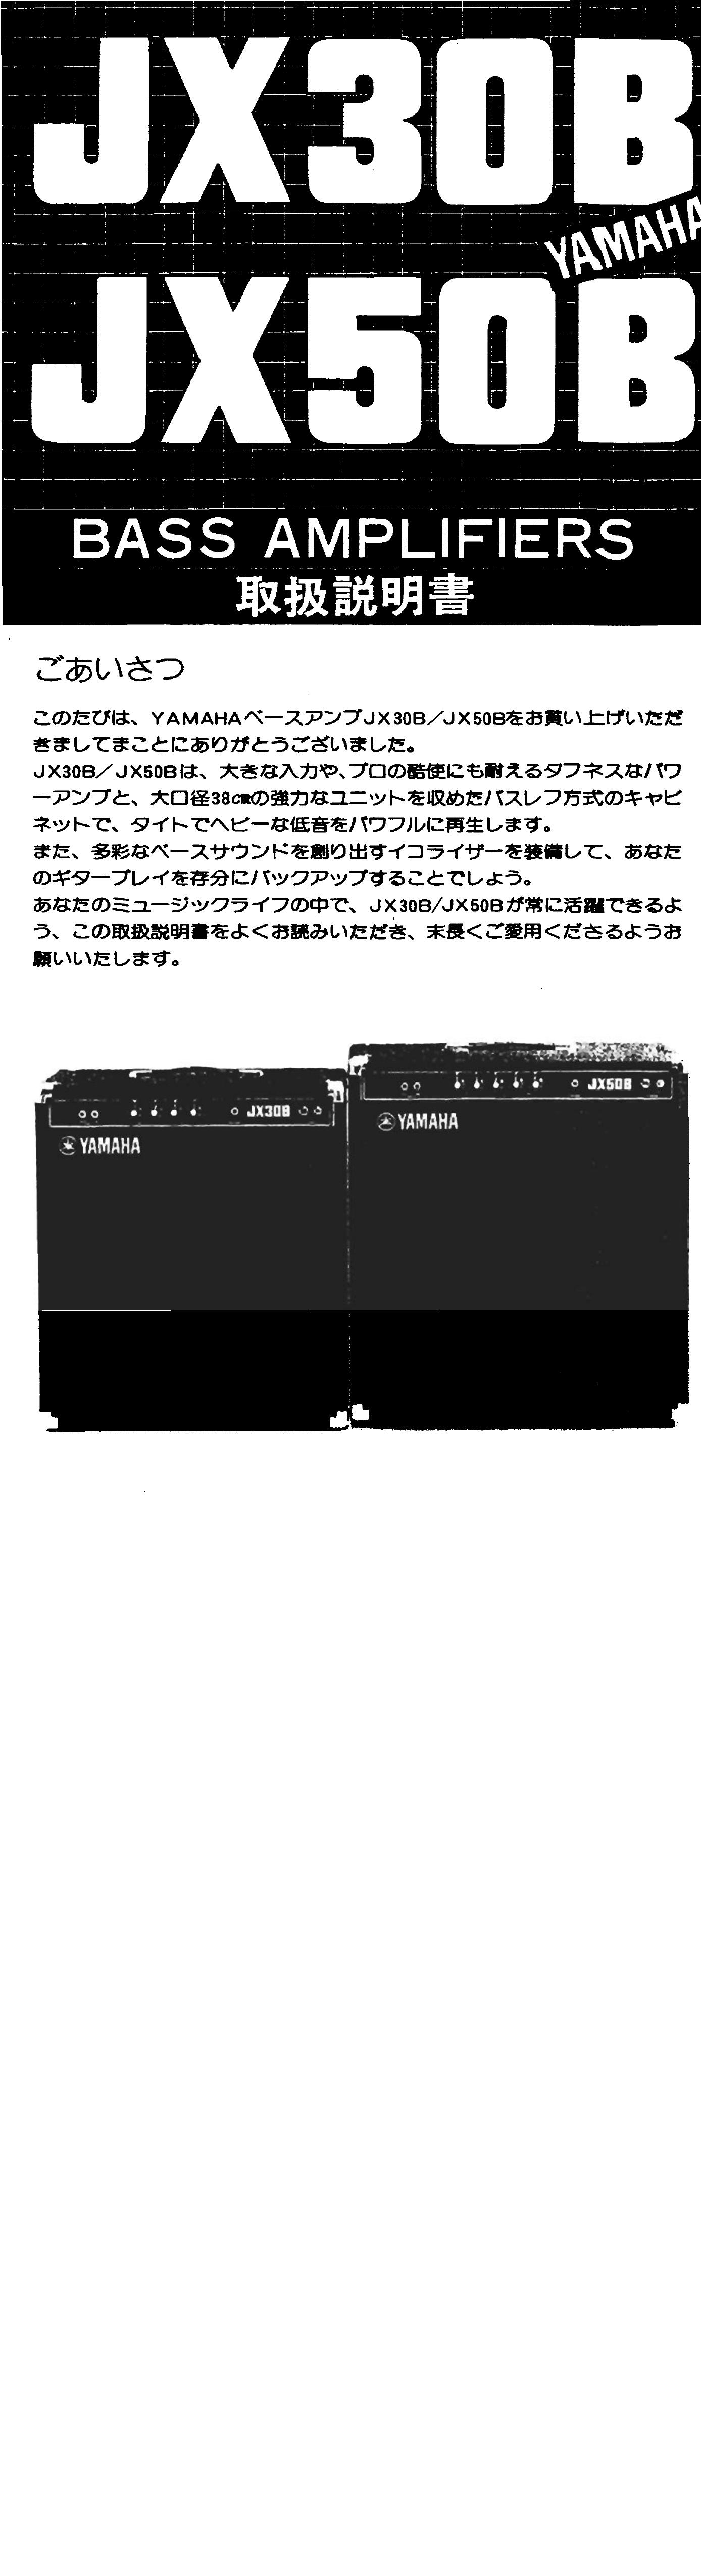 Yamaha JX50B Musical Instrument Amplifier User Manual